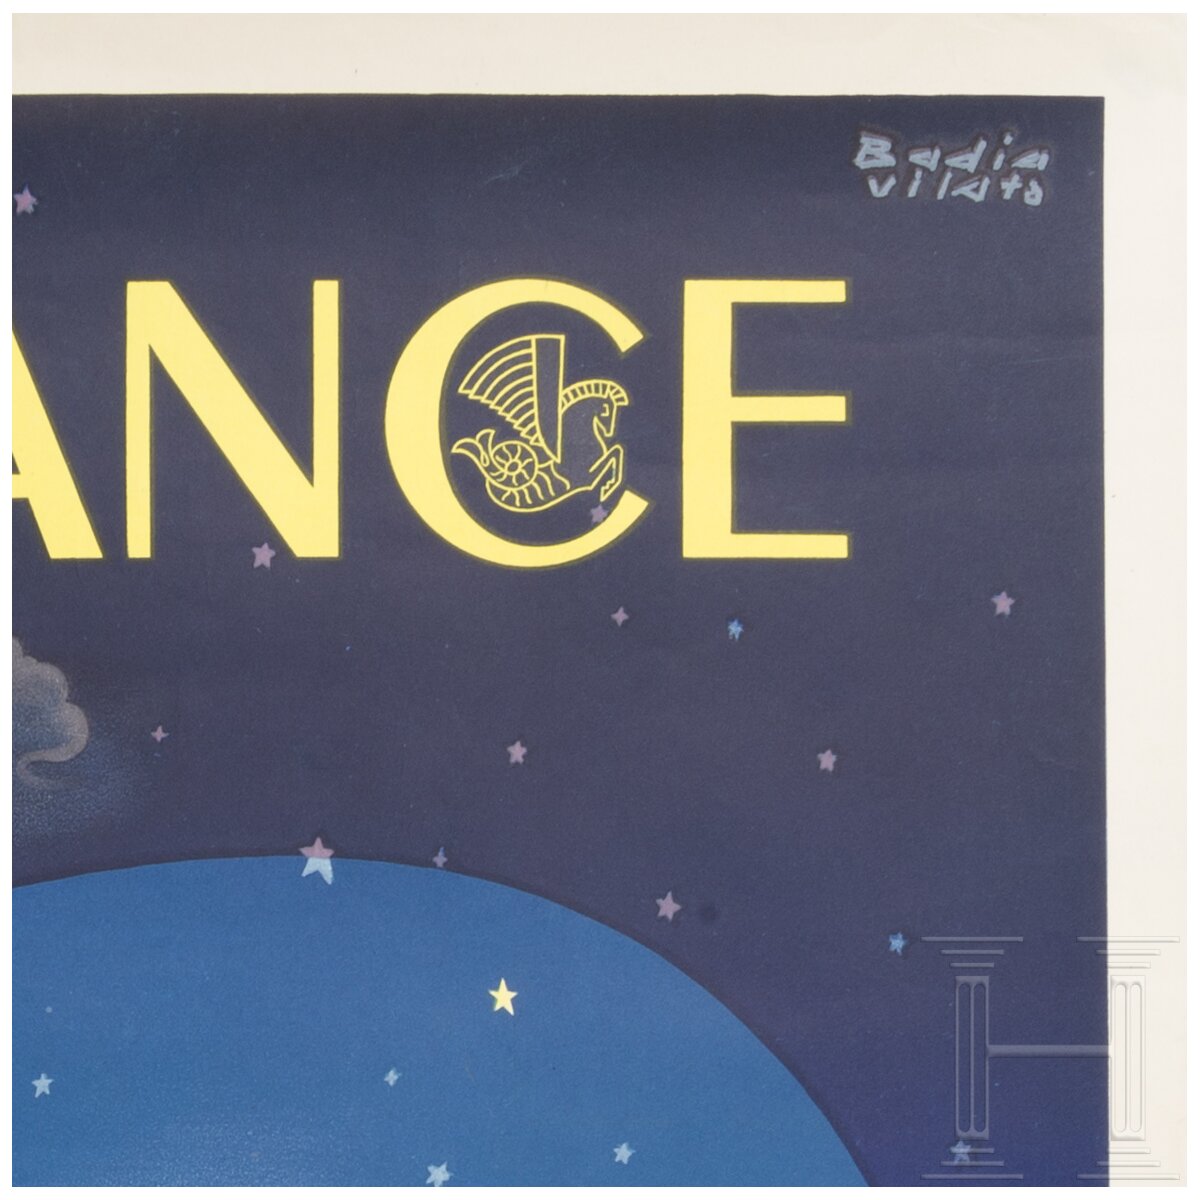 Werbeplakat der Air France "Dans tous les Ciels", Badia Vilato, 1951 - Image 4 of 4